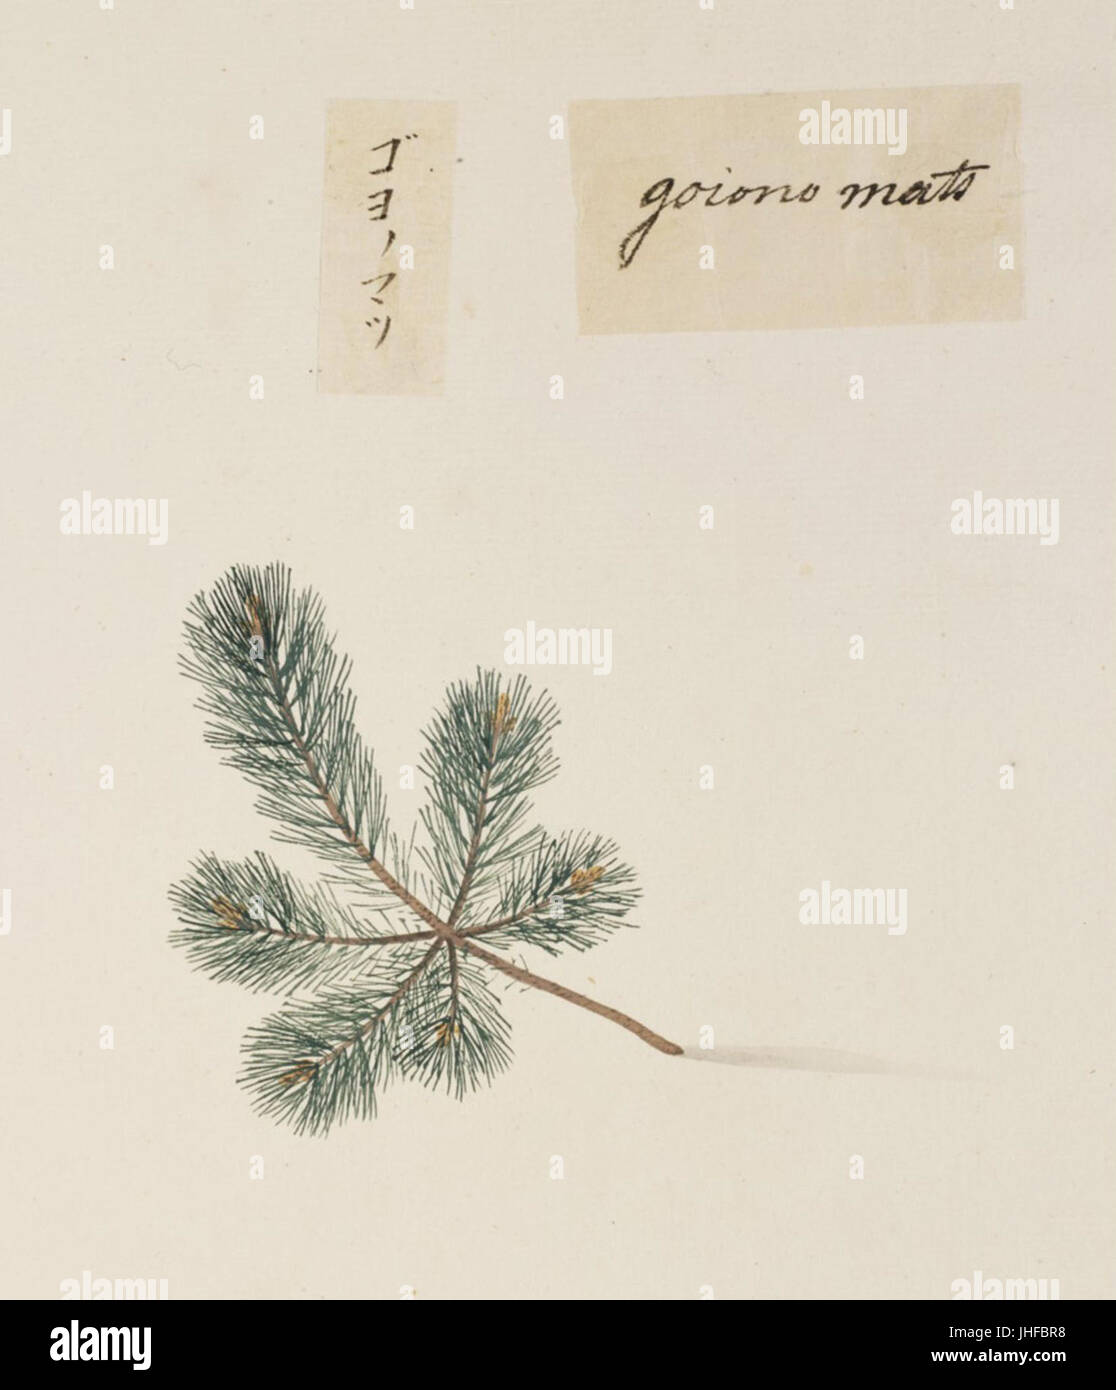 Naturalis Biodiversity Center - RMNH.ART.857 - Pinus parviflora - Kawahara Keiga - 1823 - 1829 - Siebold Collection - pencil drawing - water colour Stock Photo